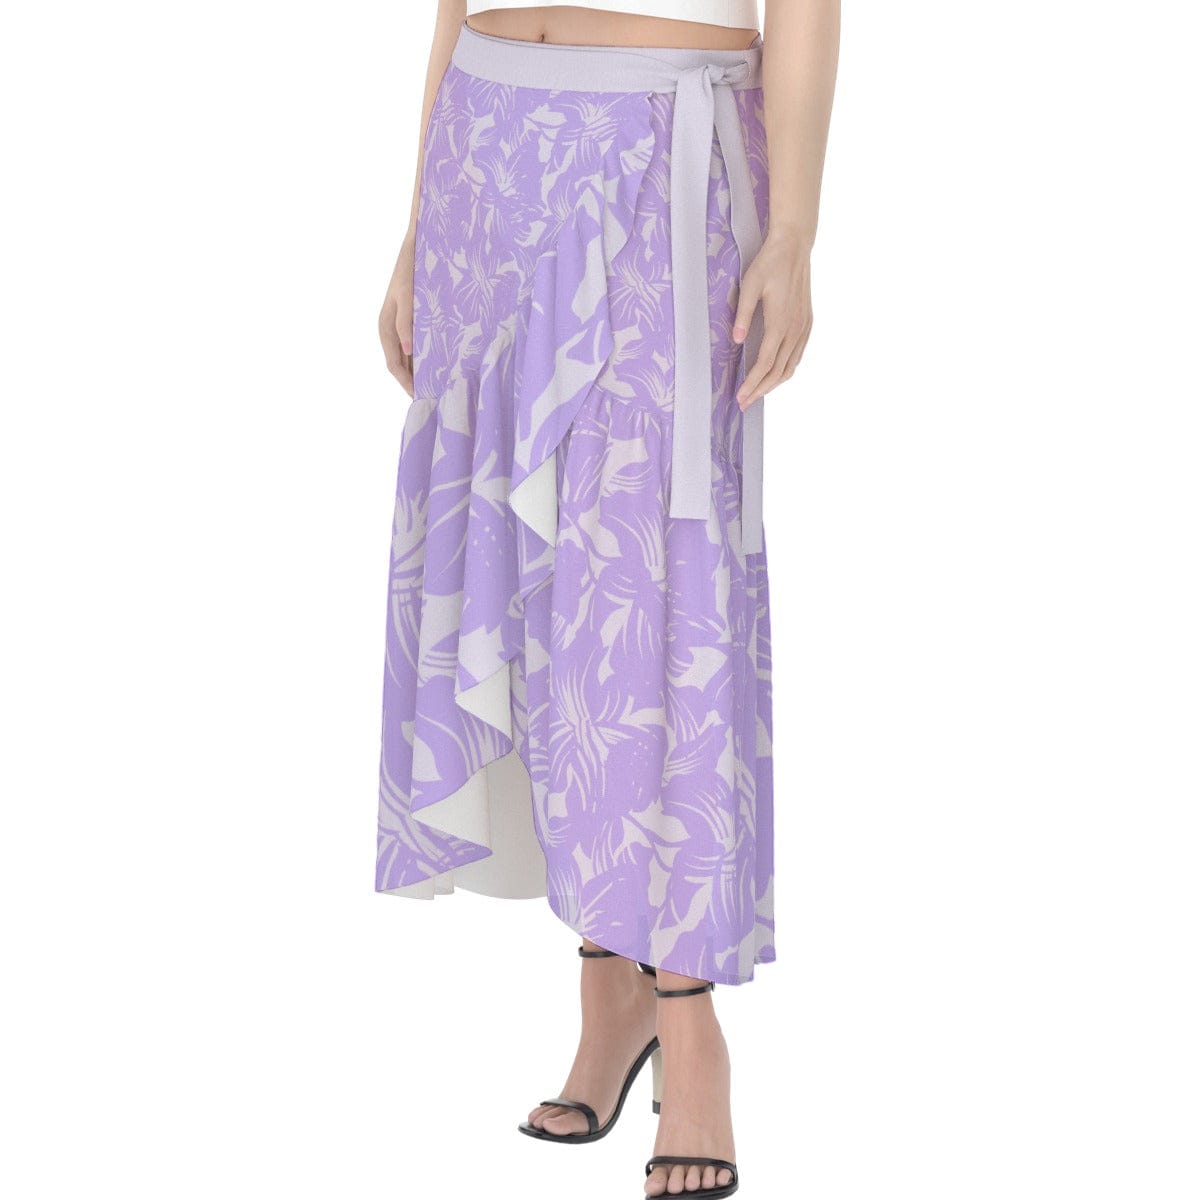 Yoycol Skirt Hawaiian Lavender - Women's Wrap Skirt